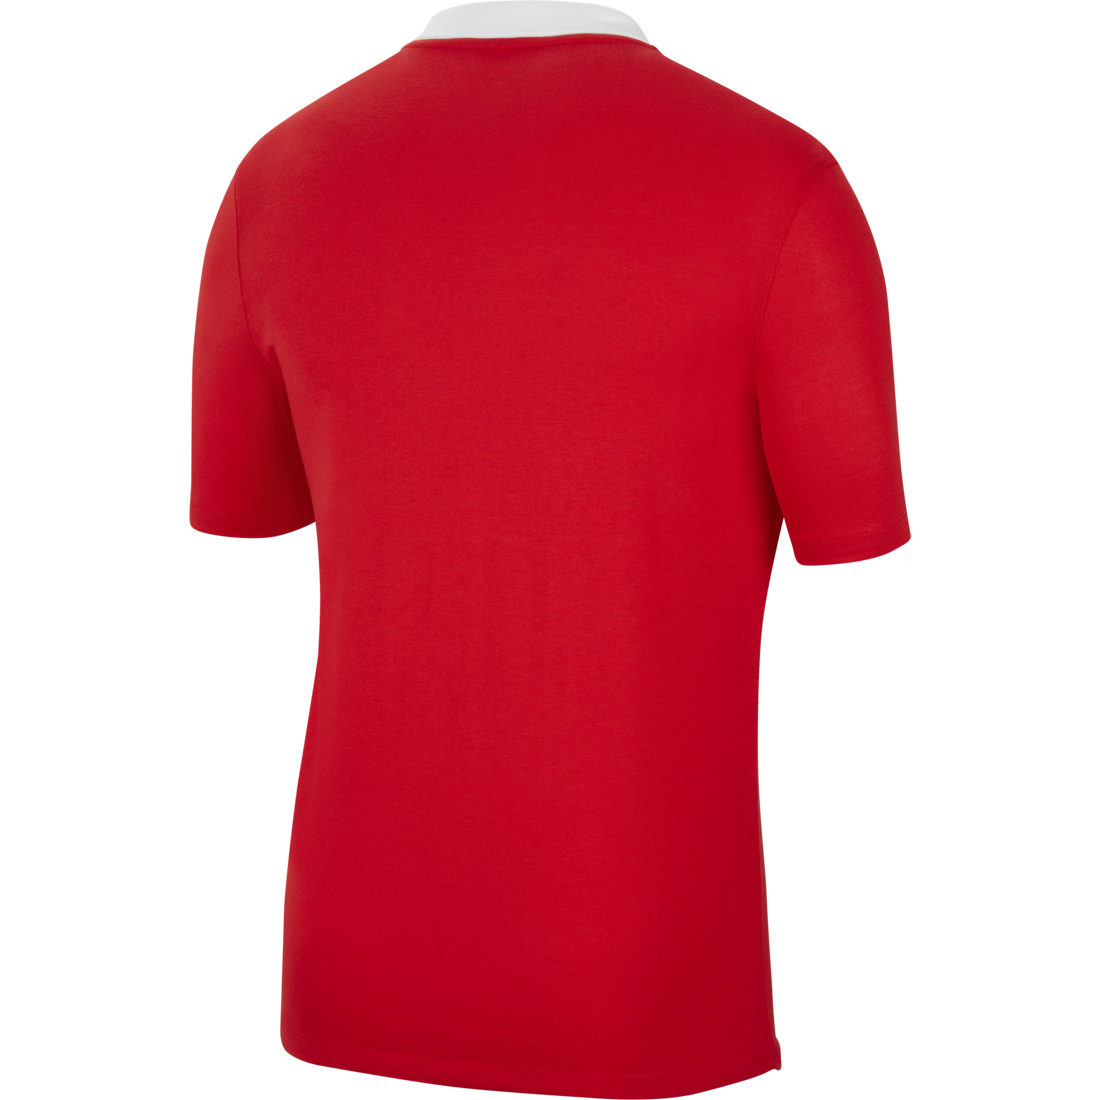 Nike Herren Poloshirt Park 20 rot-weiß